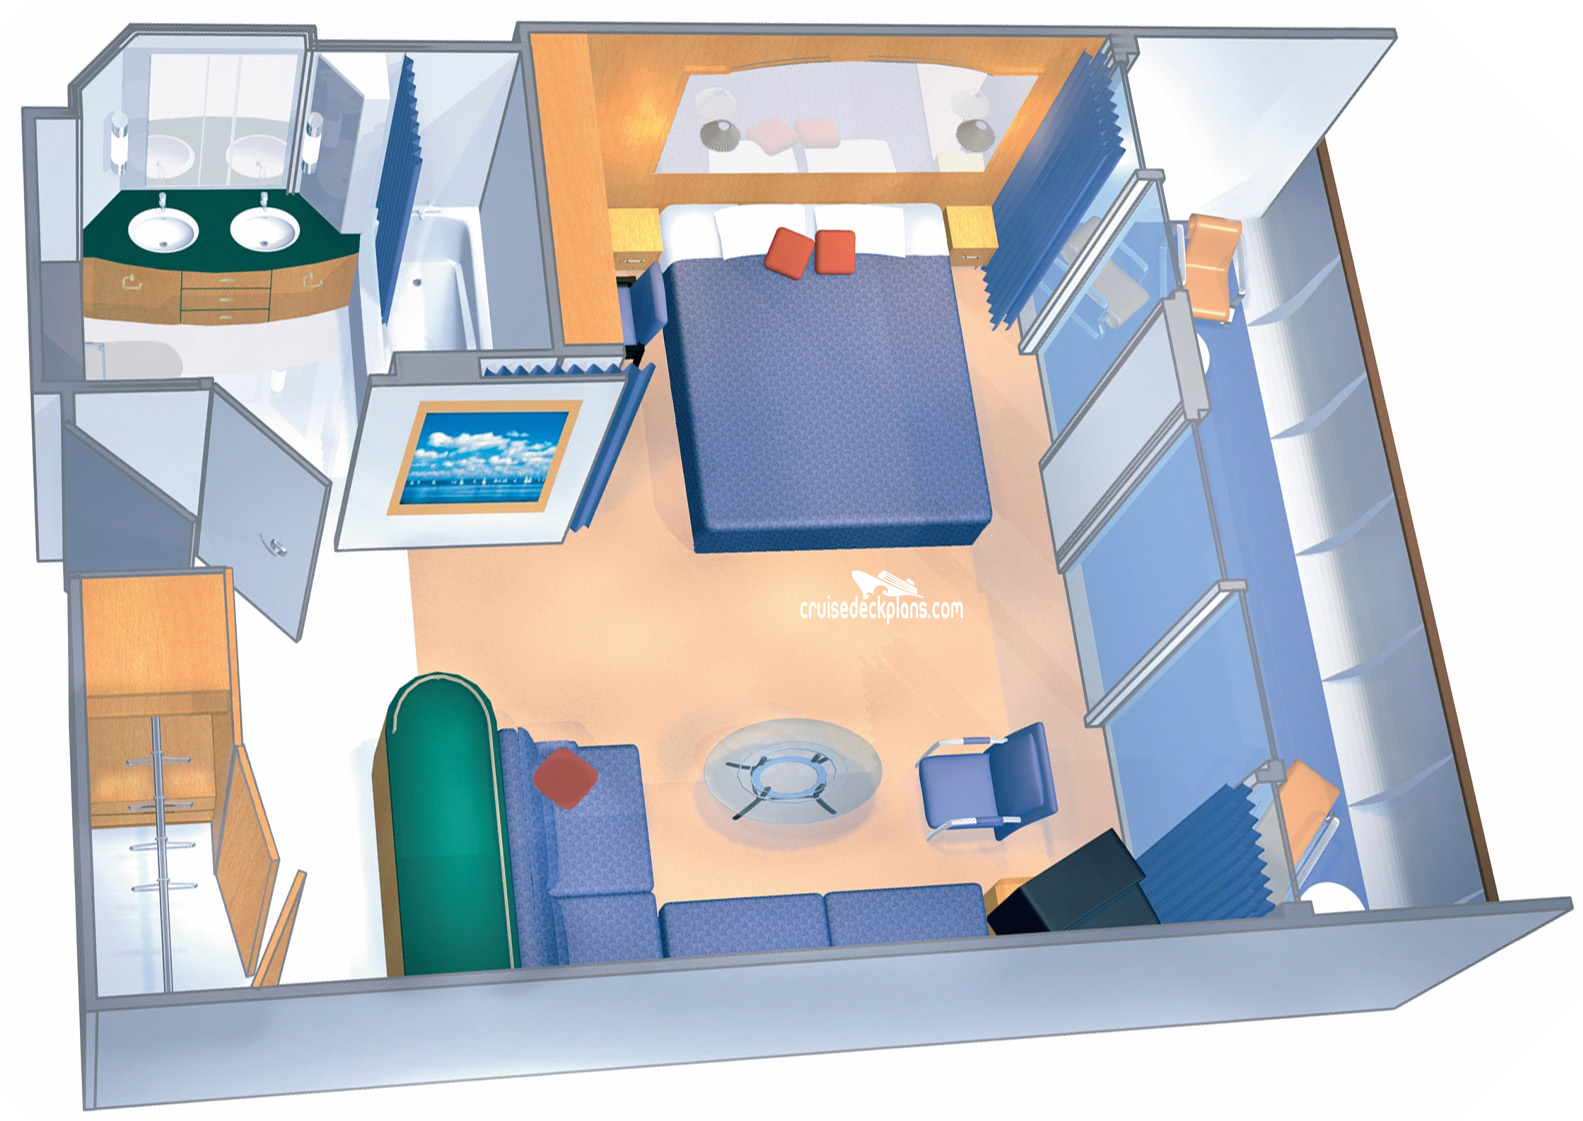 Rhapsody of the Seas Grand Suite cabin floor plan